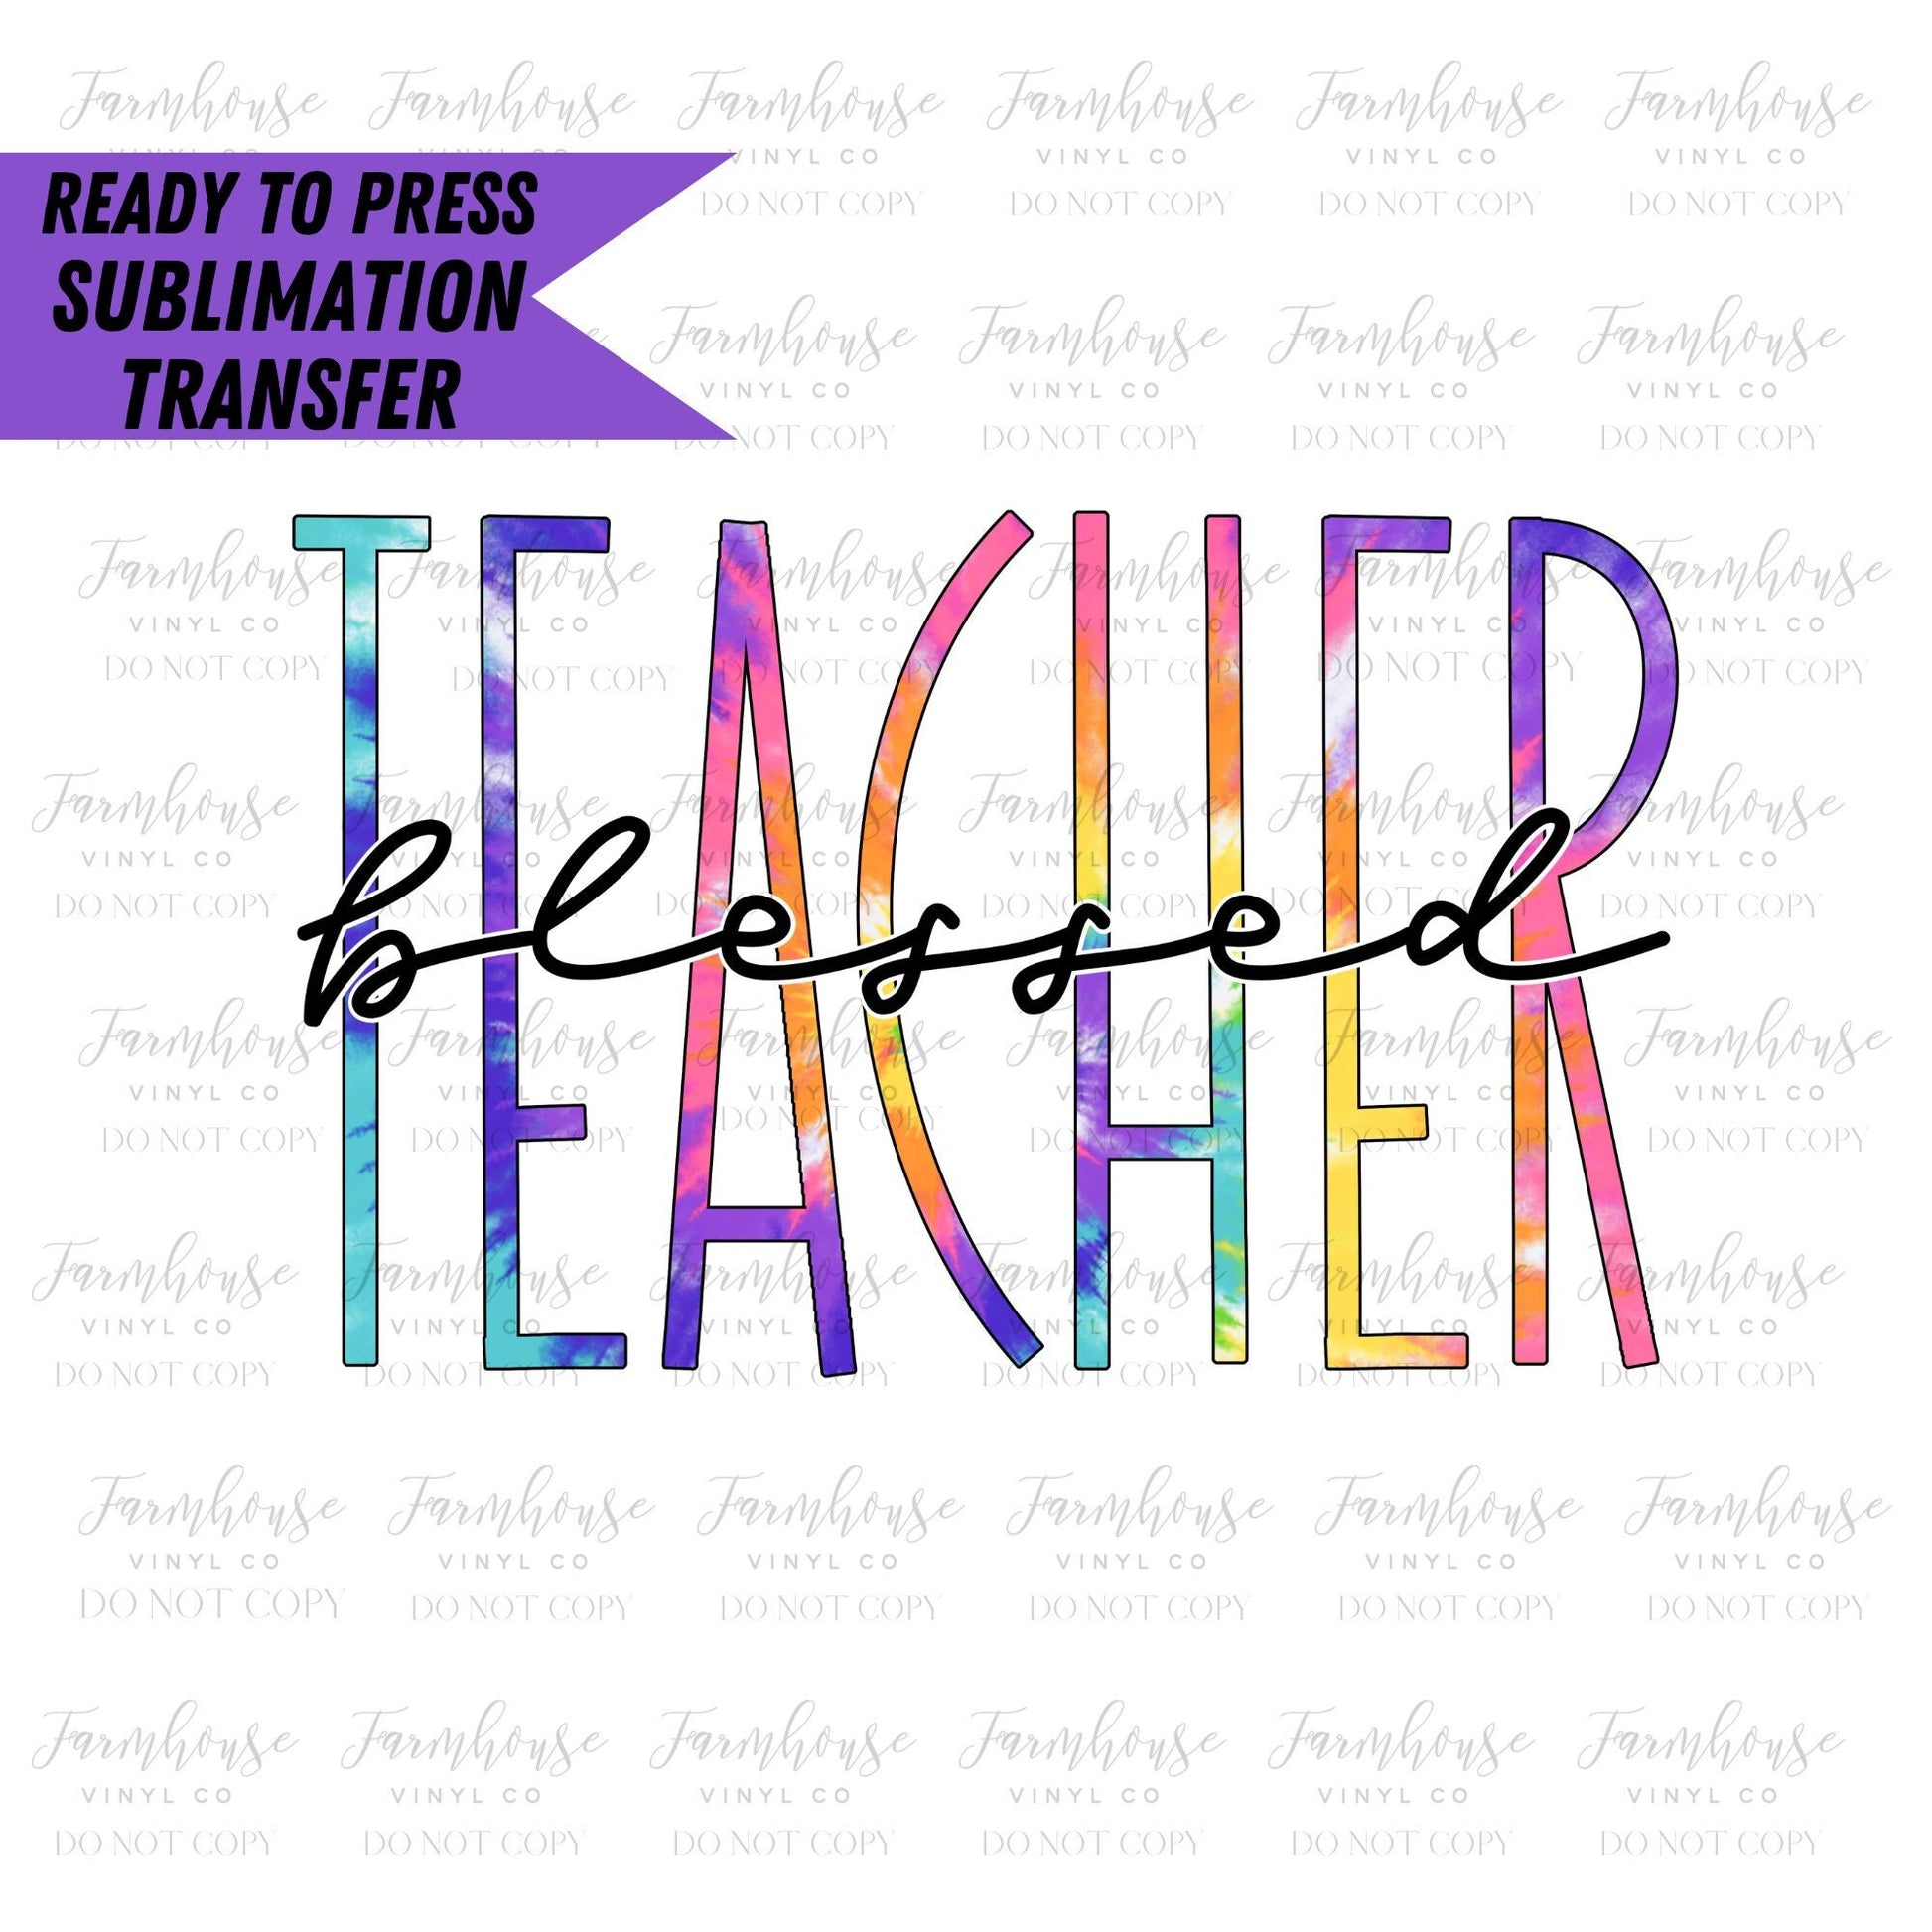 Blessed Teacher Tie Dye, Ready to Press Sublimation Transfer, Sublimation Transfers, Heat Transfer, Ready to Press, Teacher, School Design - Farmhouse Vinyl Co